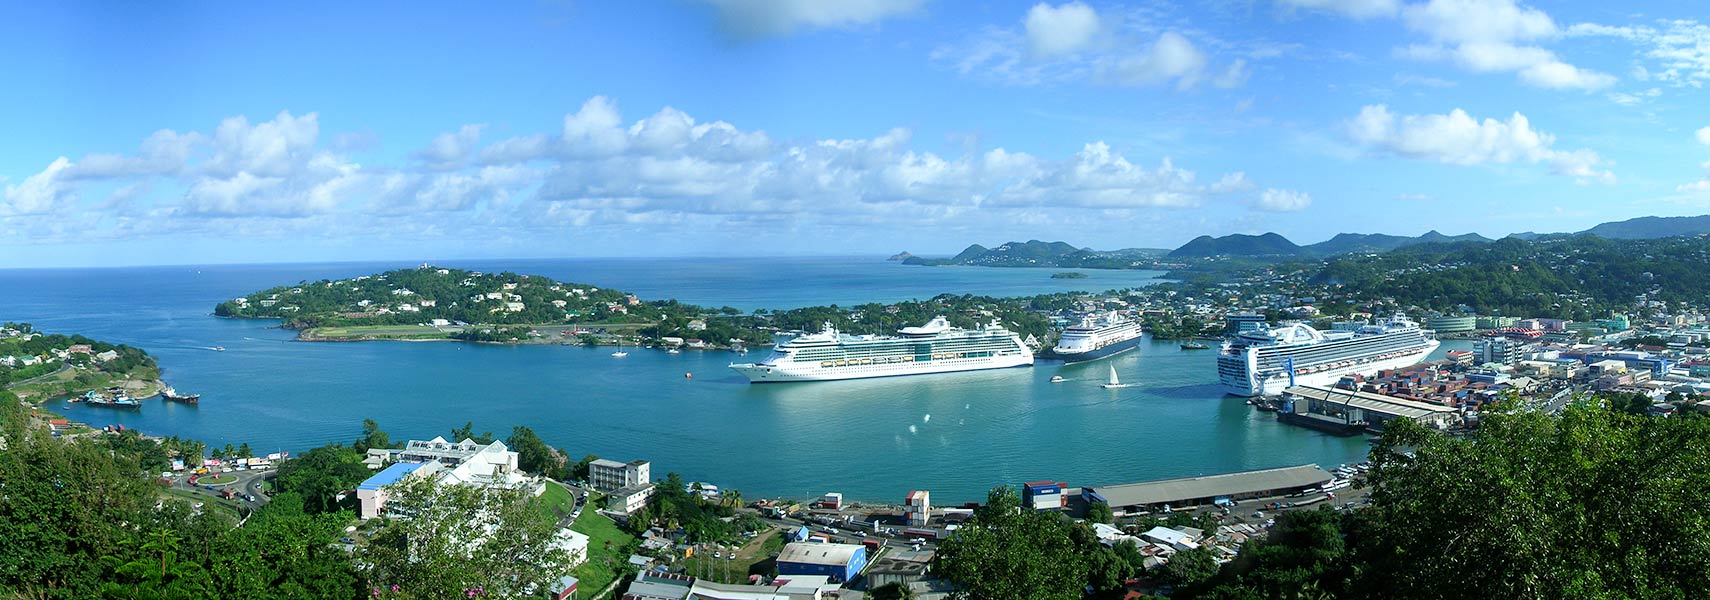 Port of Castries, capital, Saint Lucia